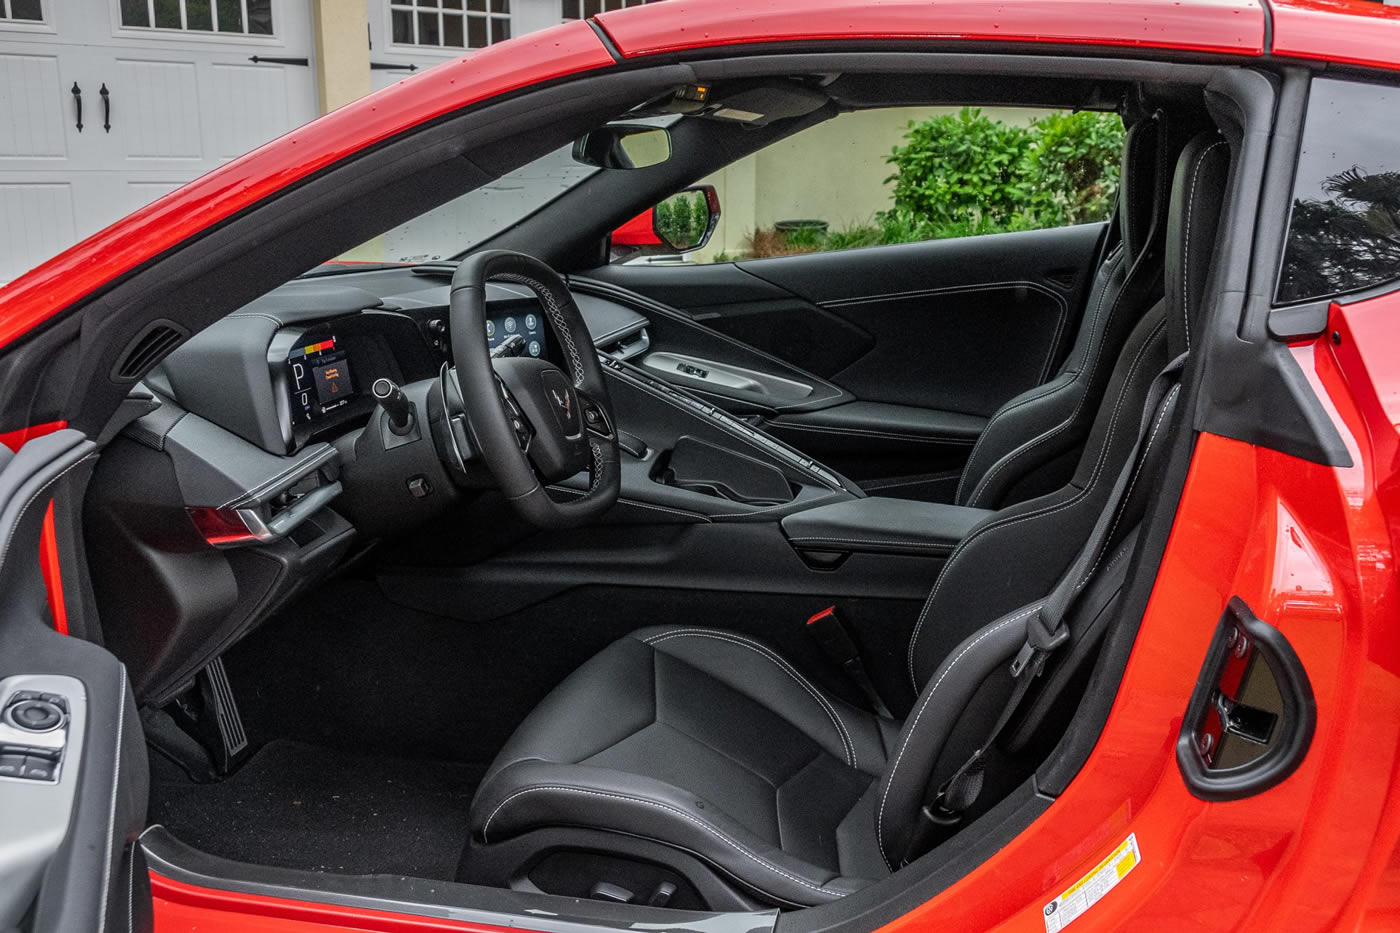 2021 Corvette Stingray Coupe in Torch Red